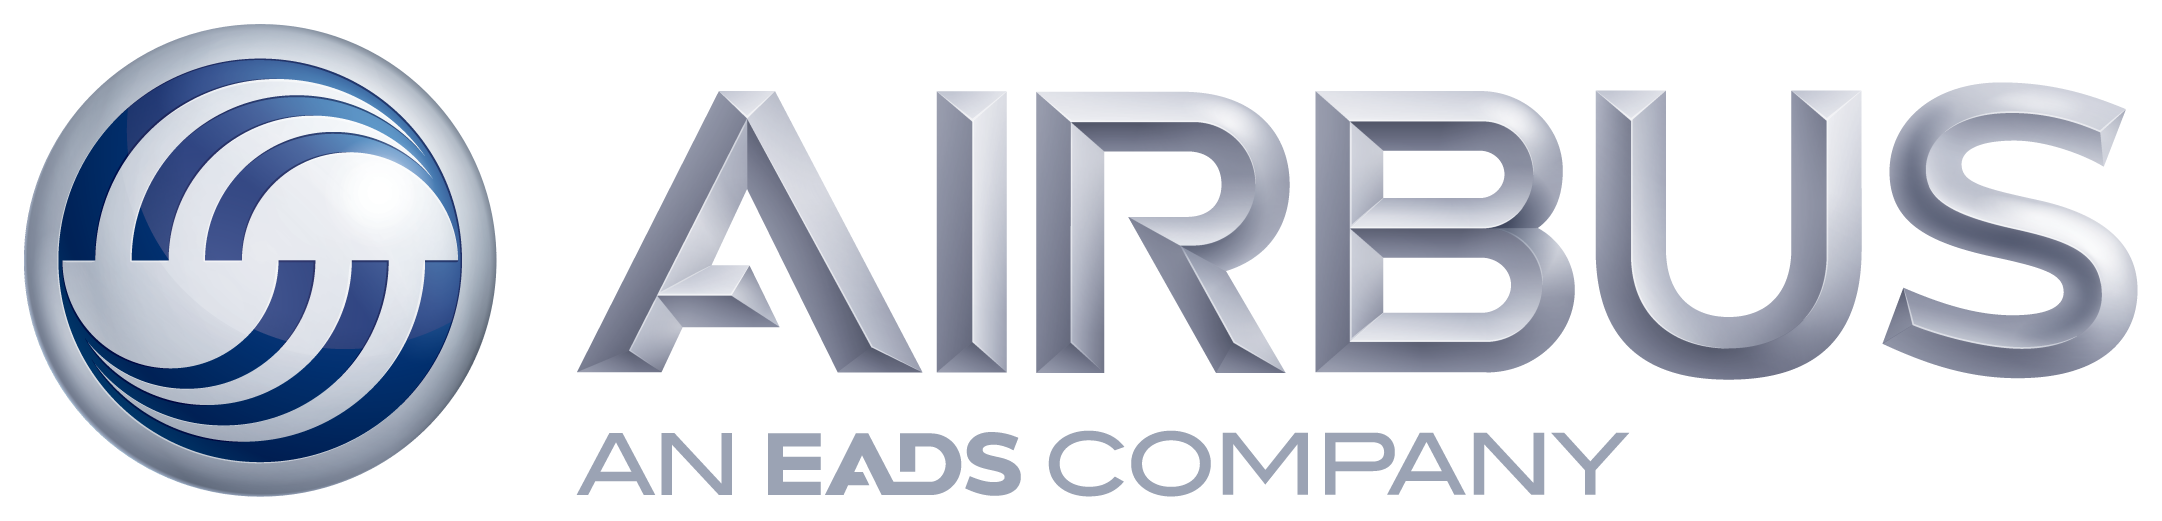 AIRBUS_logo_silver_horizontal